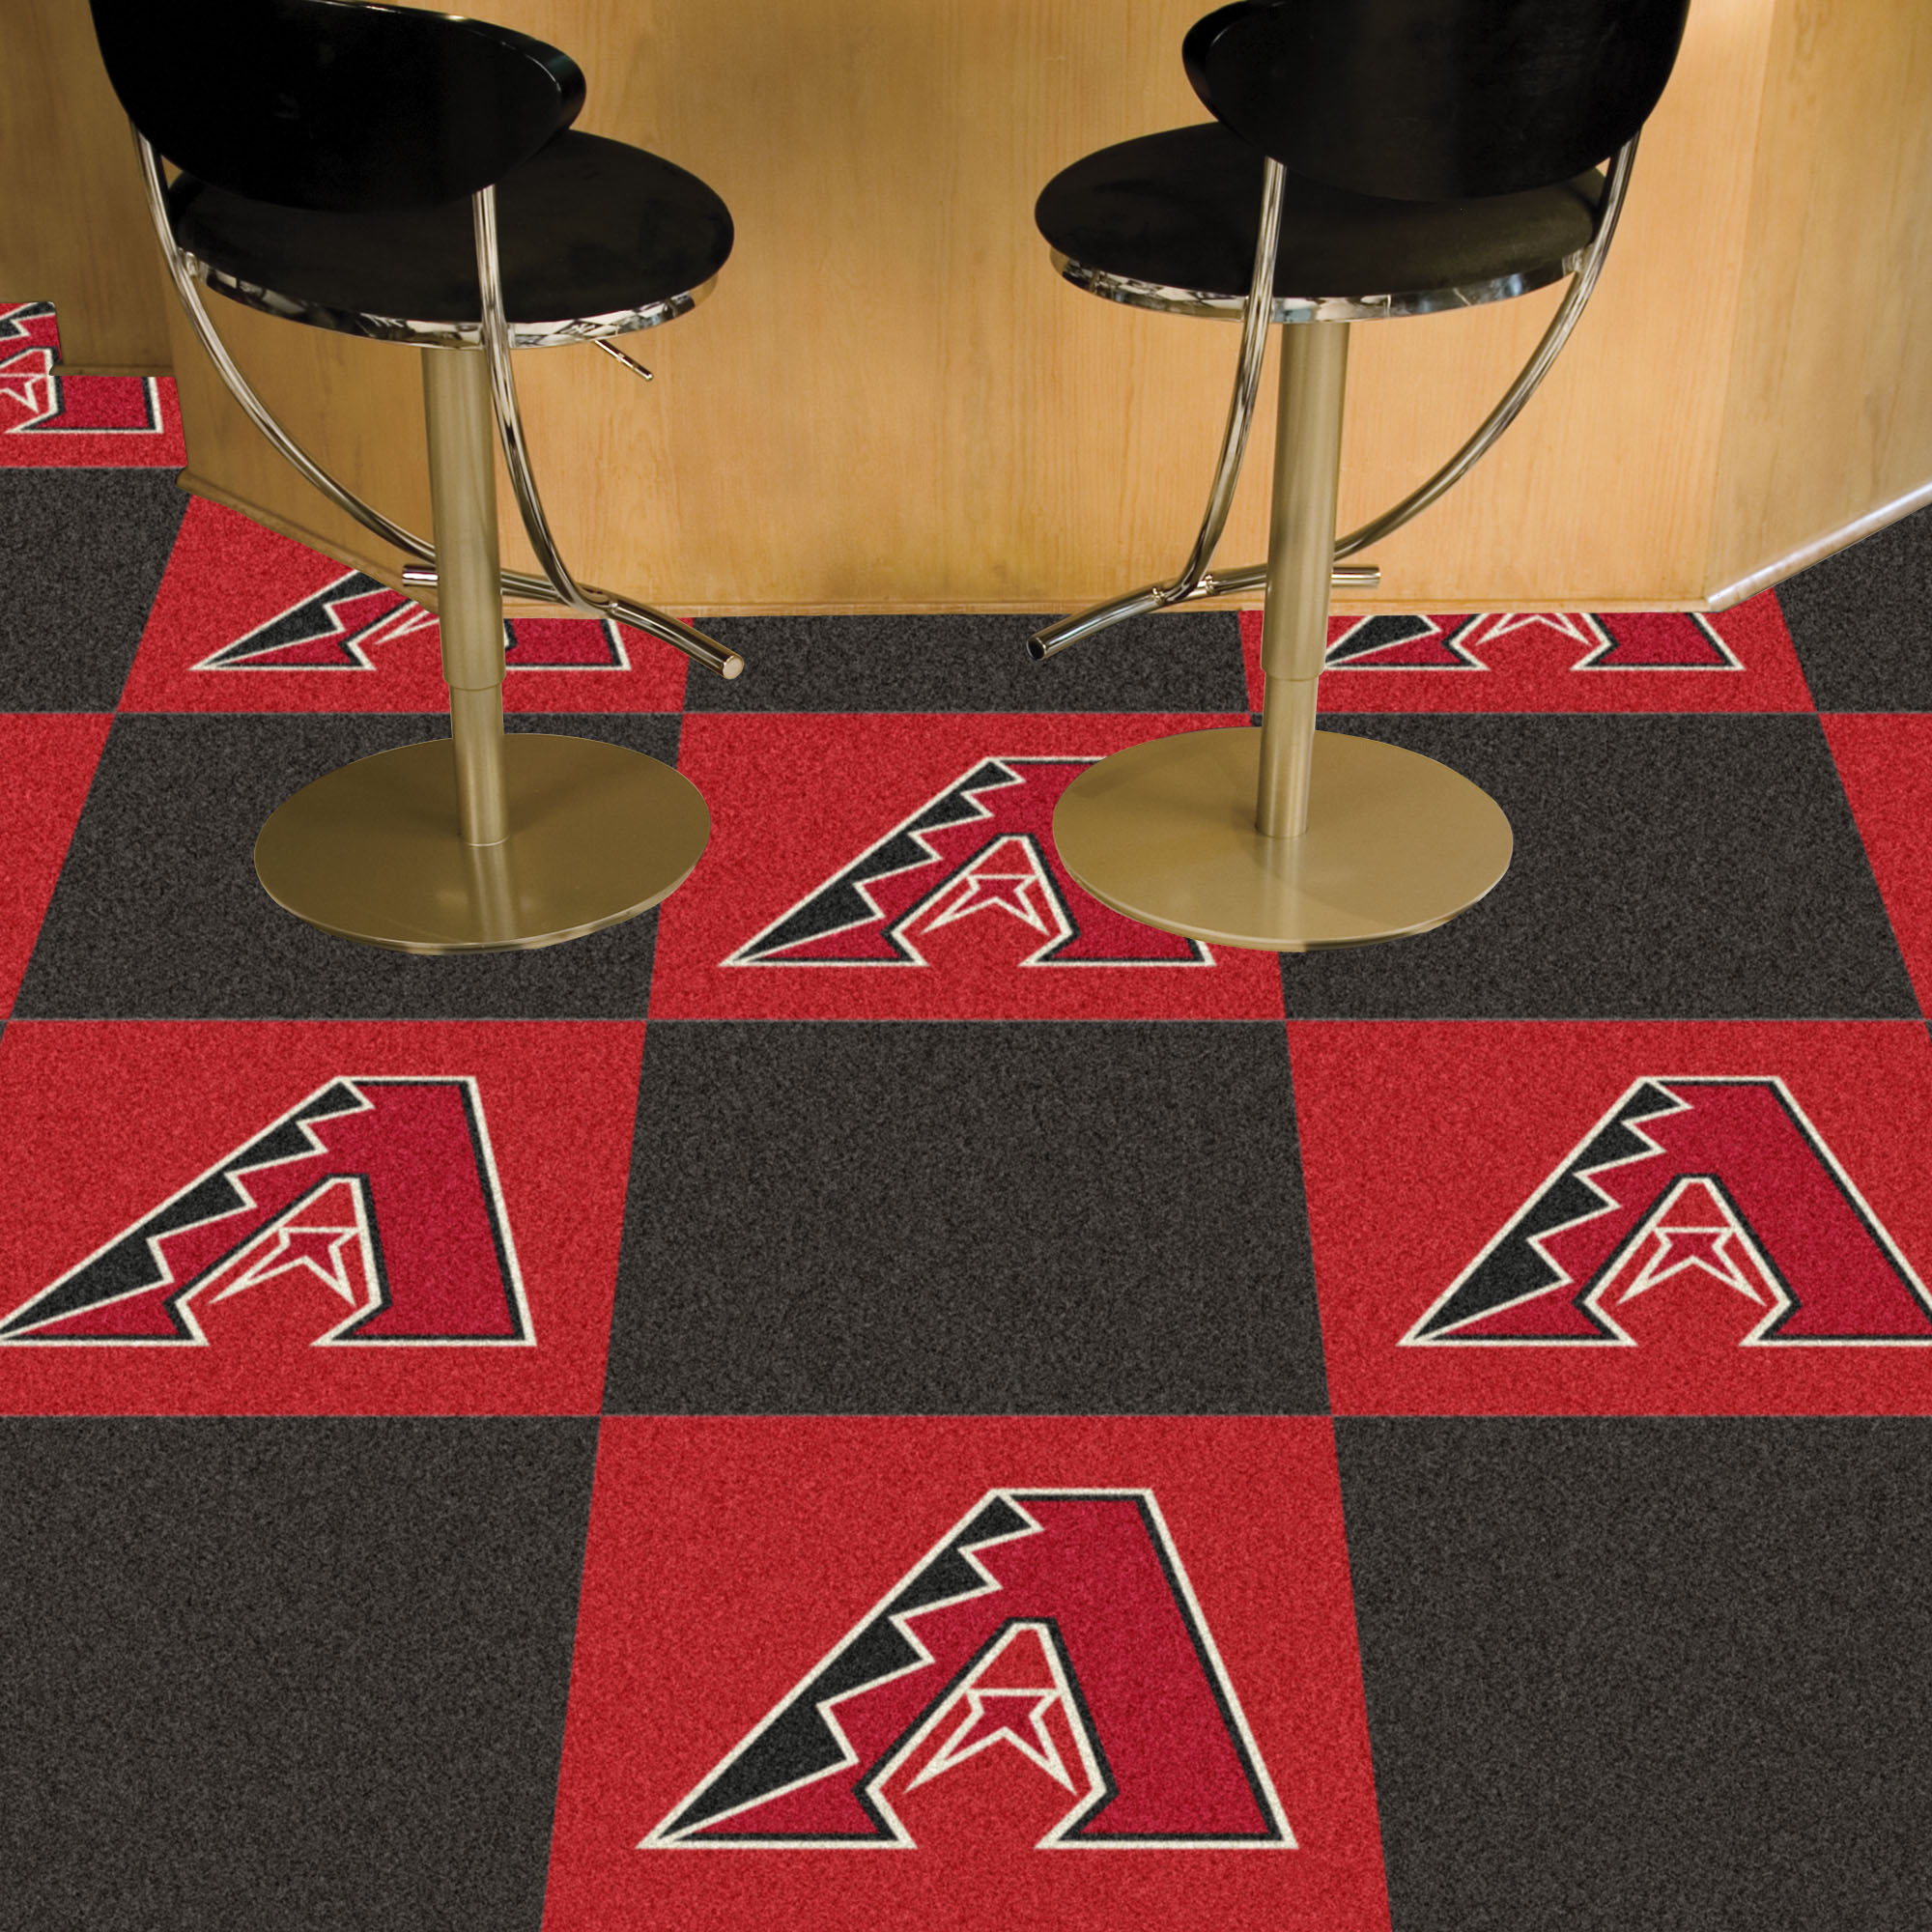 Arizona Diamondbacks Team Carpet Tiles - 45 sq ft